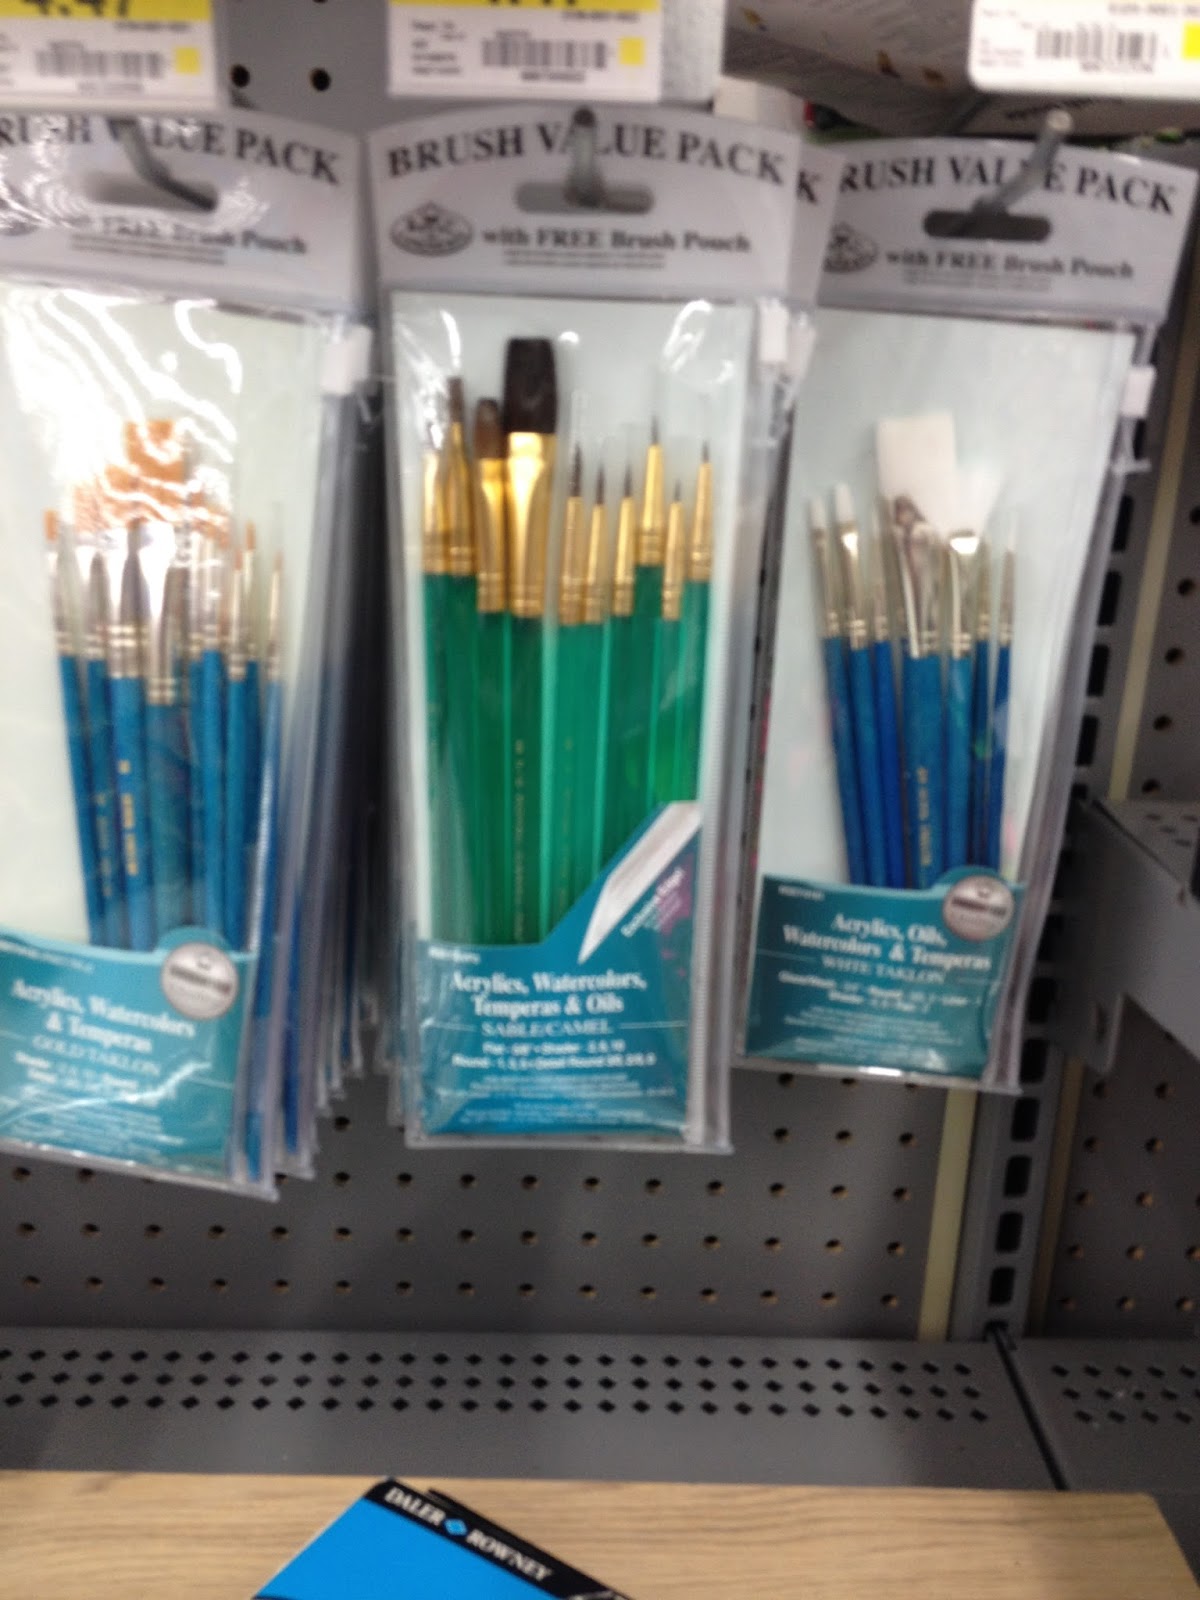 Ranger - Tim Holtz Distress Watercolor Pencil Bundle (10% off regular price)